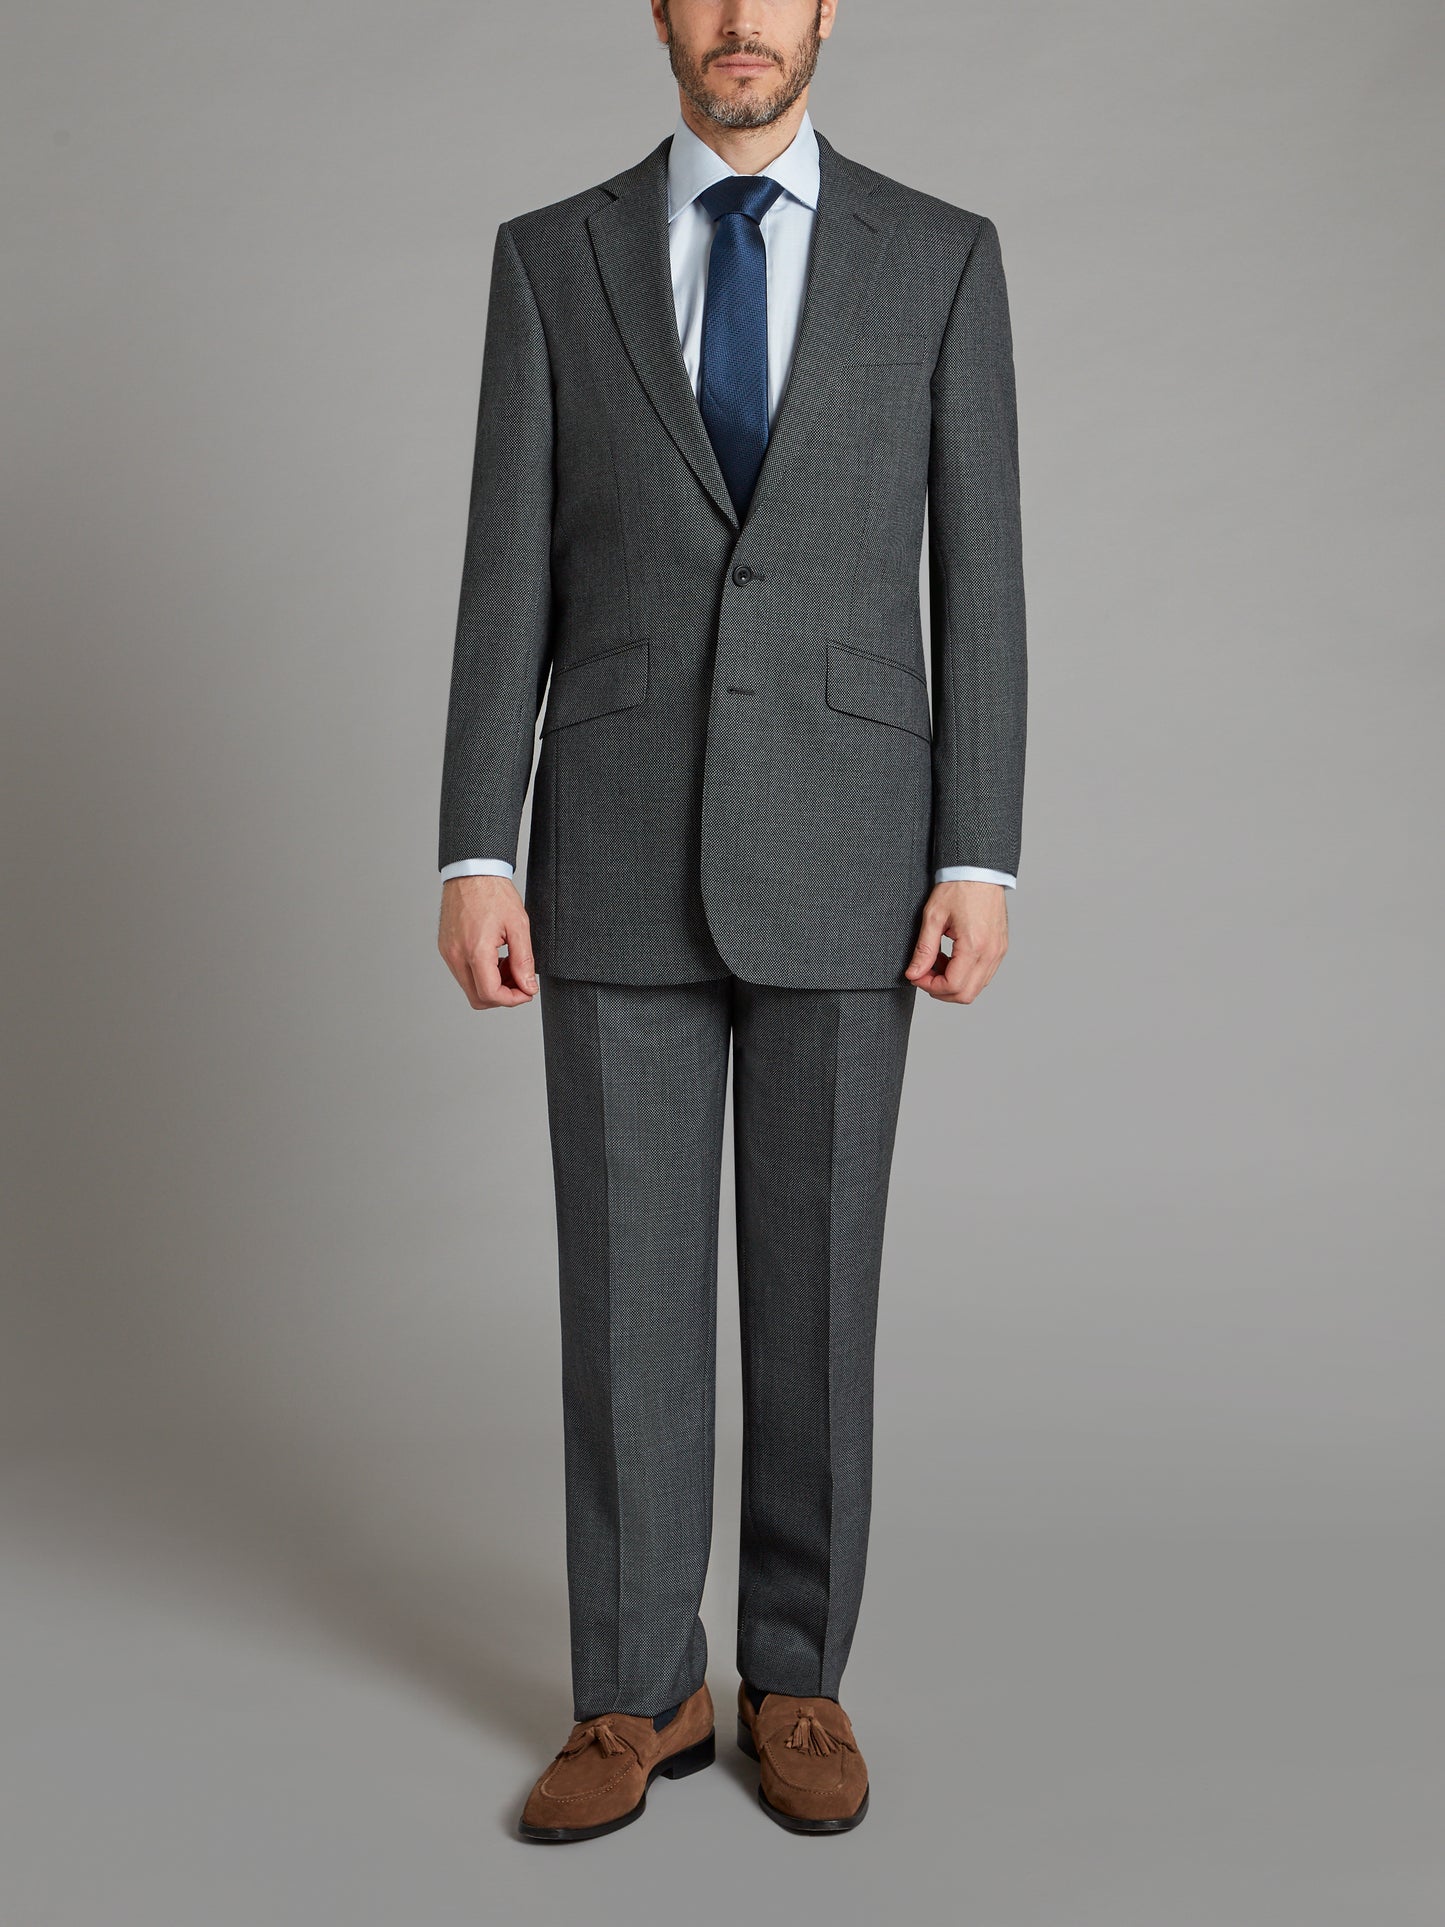 Limited Edition Eaton Suit - Lightweight Grey Birdseye